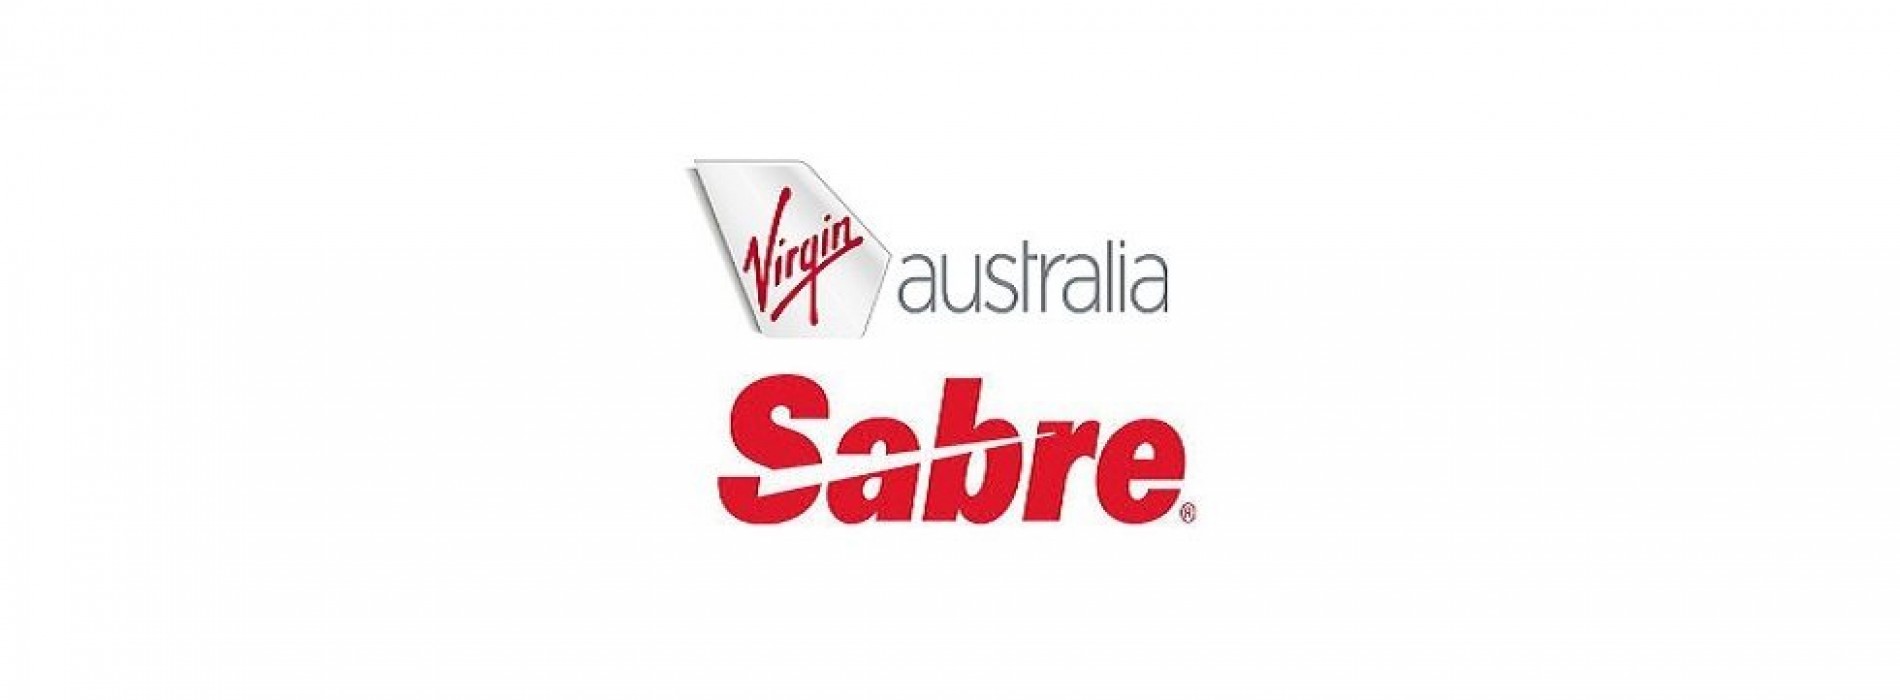 Virgin Australia implements Sabre Branded fares